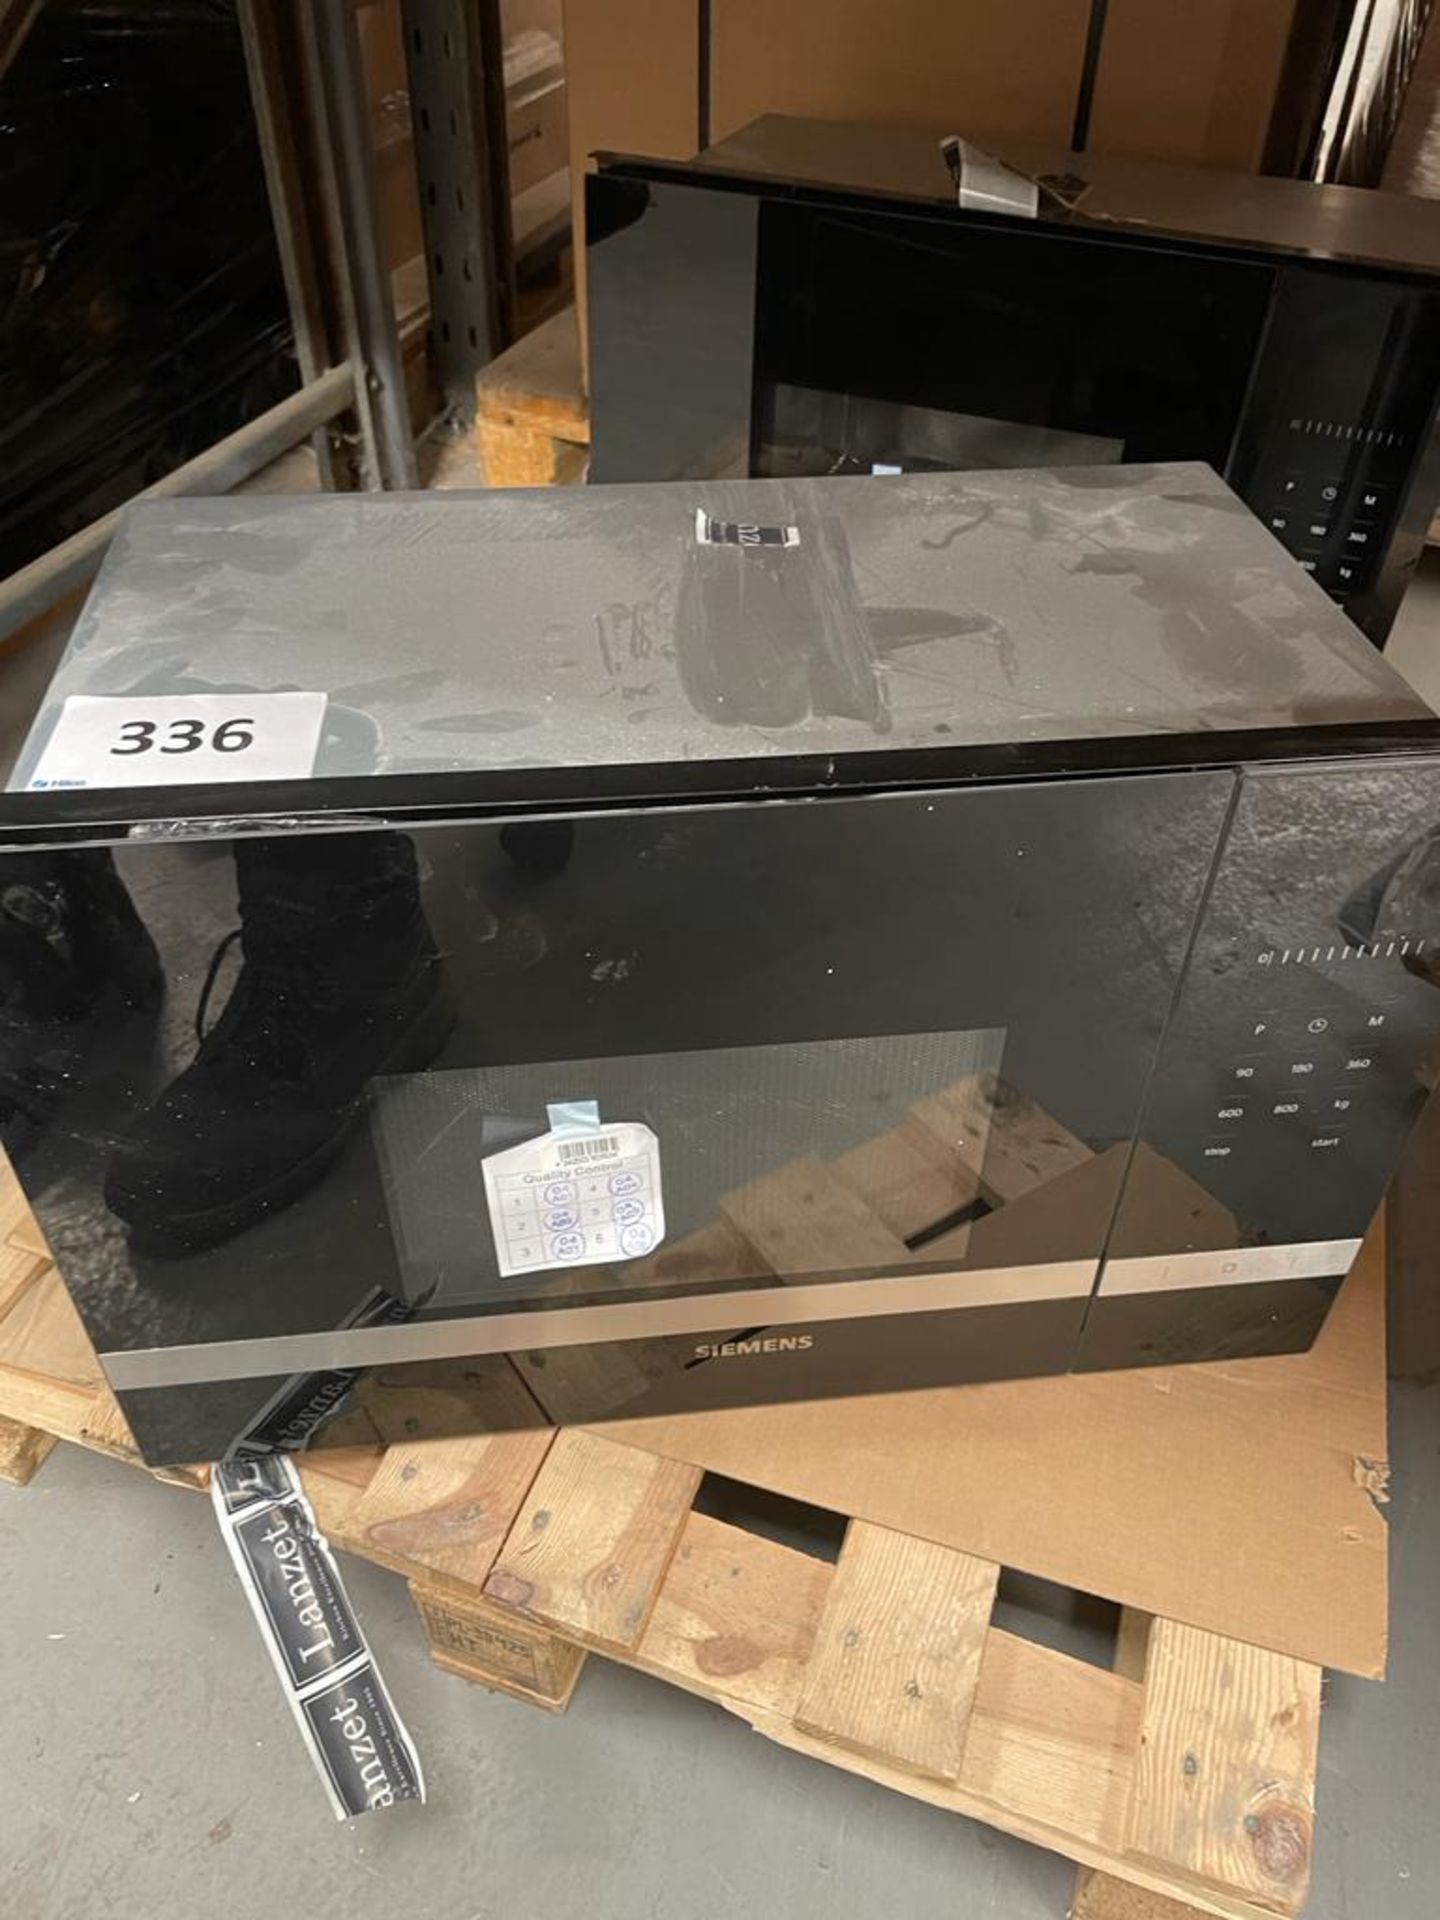 2 Siemens microwaves BF525LMSOB (Black)